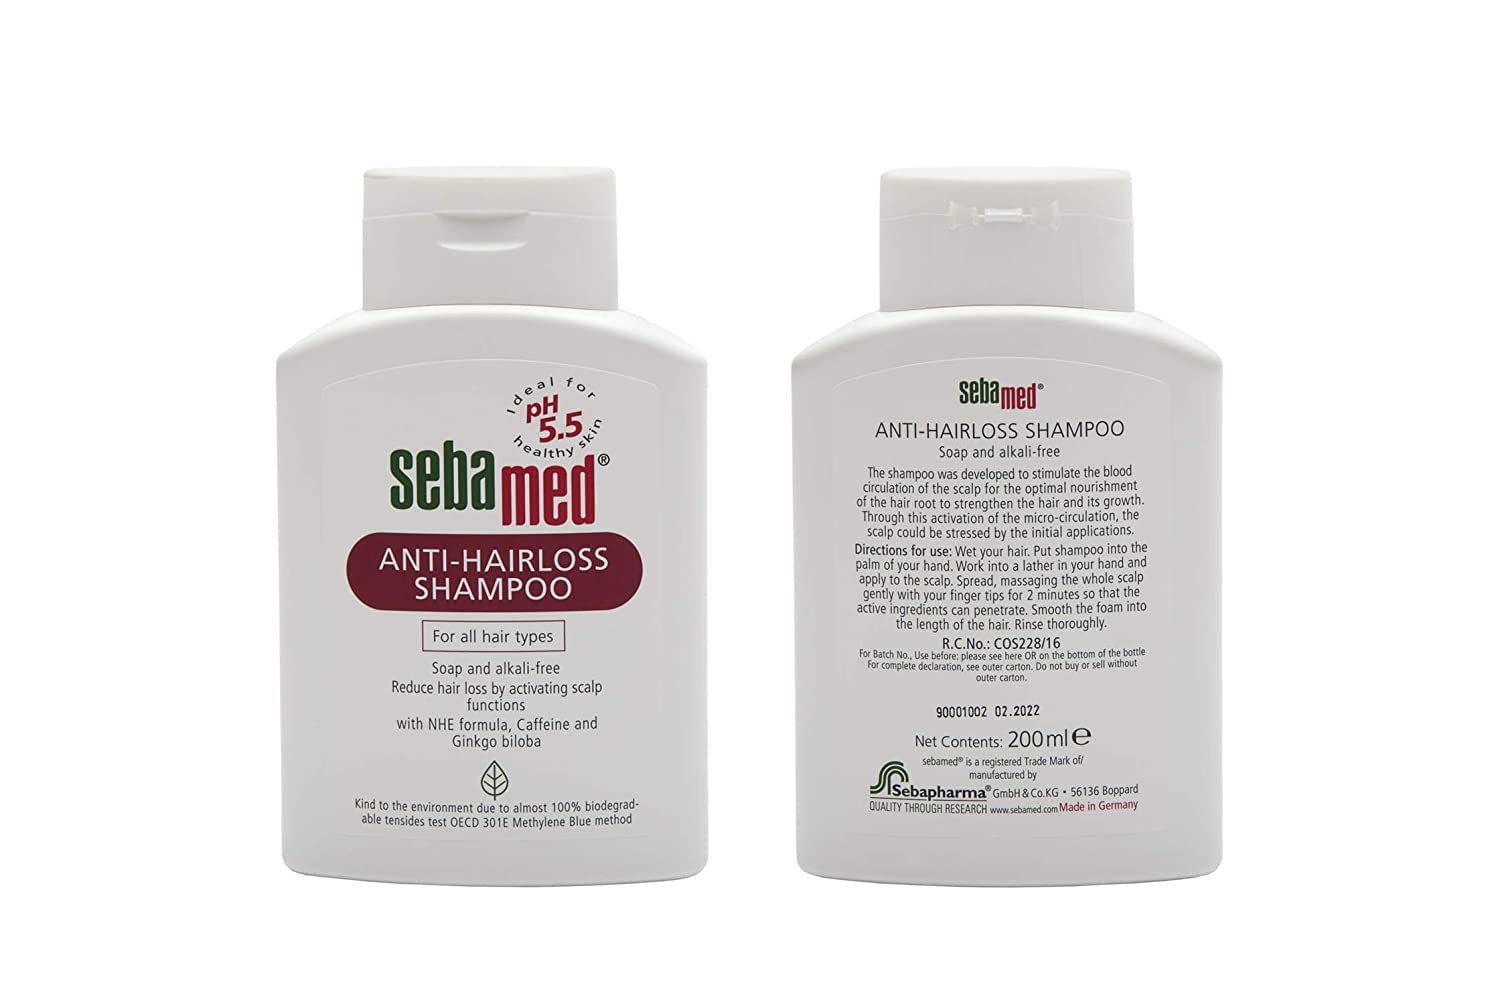 Sebamed Anti-Hairloss Shampoo, 200 ml, Pack of 1 